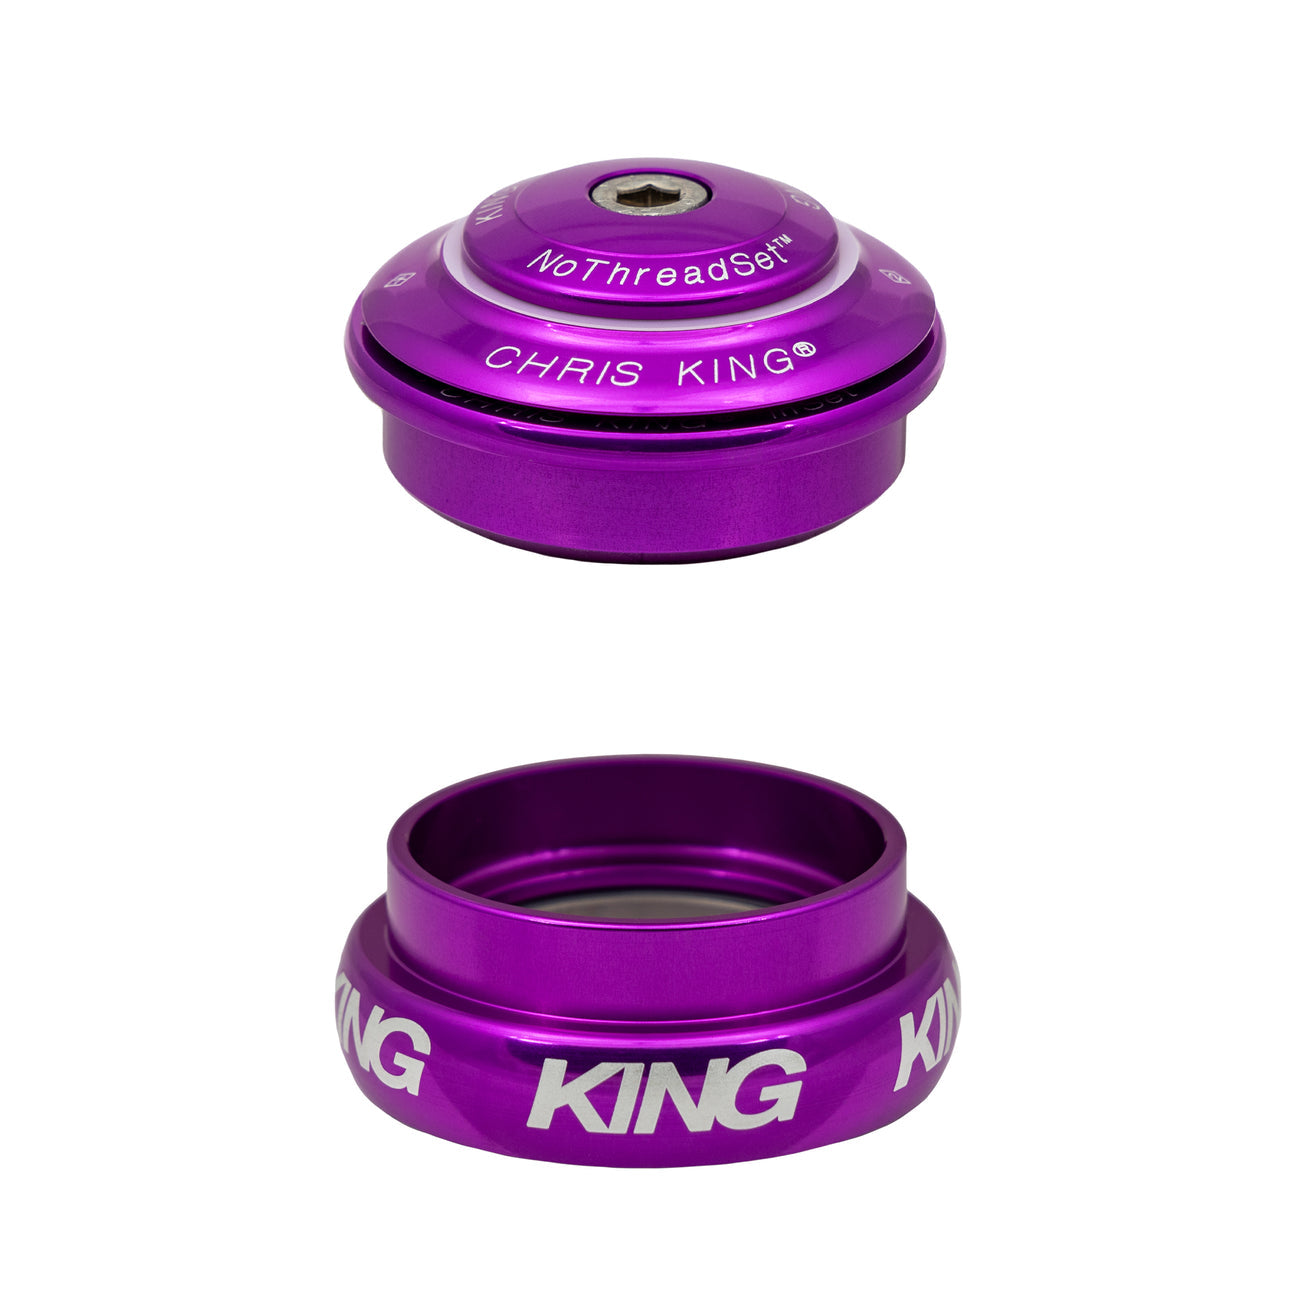 Chris King inset 8 headset in violet